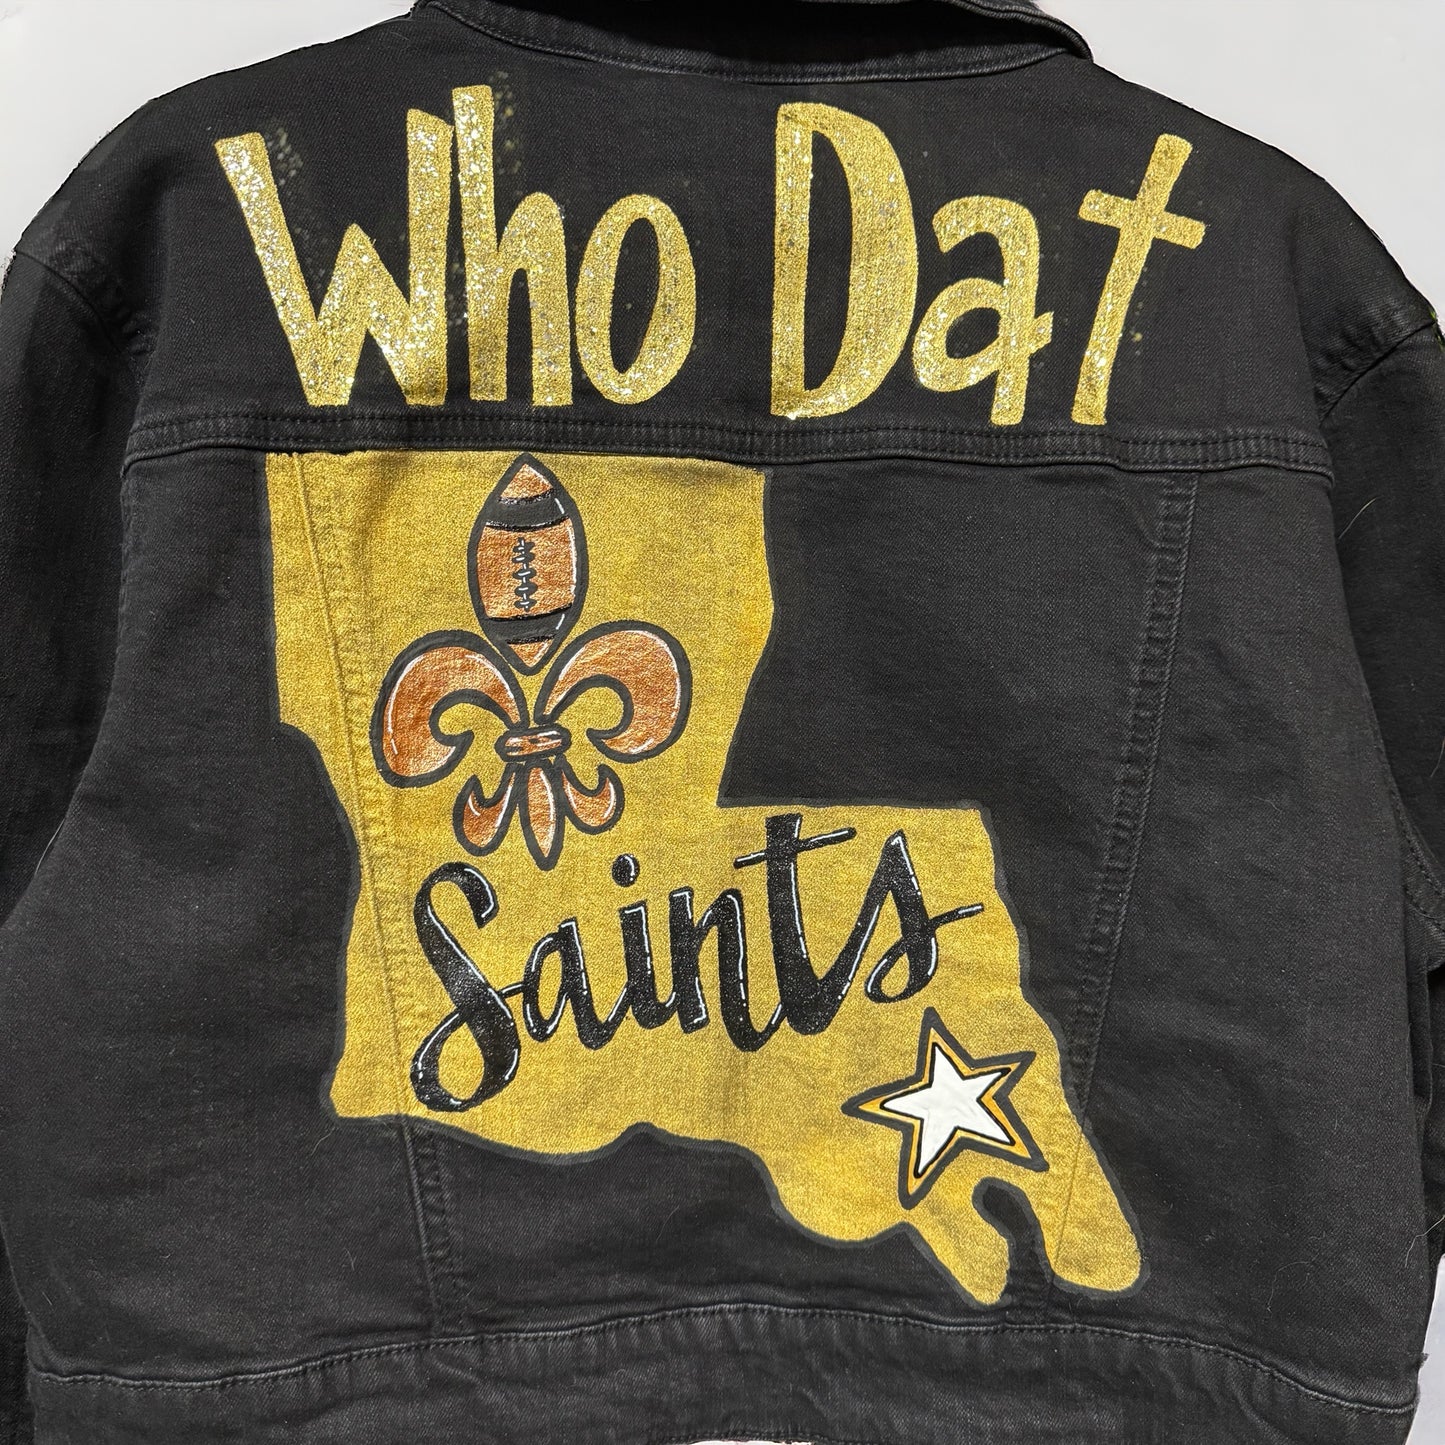 Hand Painted Jean Jacket: “Who Dat”, New Orleans Jacket, Hand Painted, NOLA Saints, Louisiana